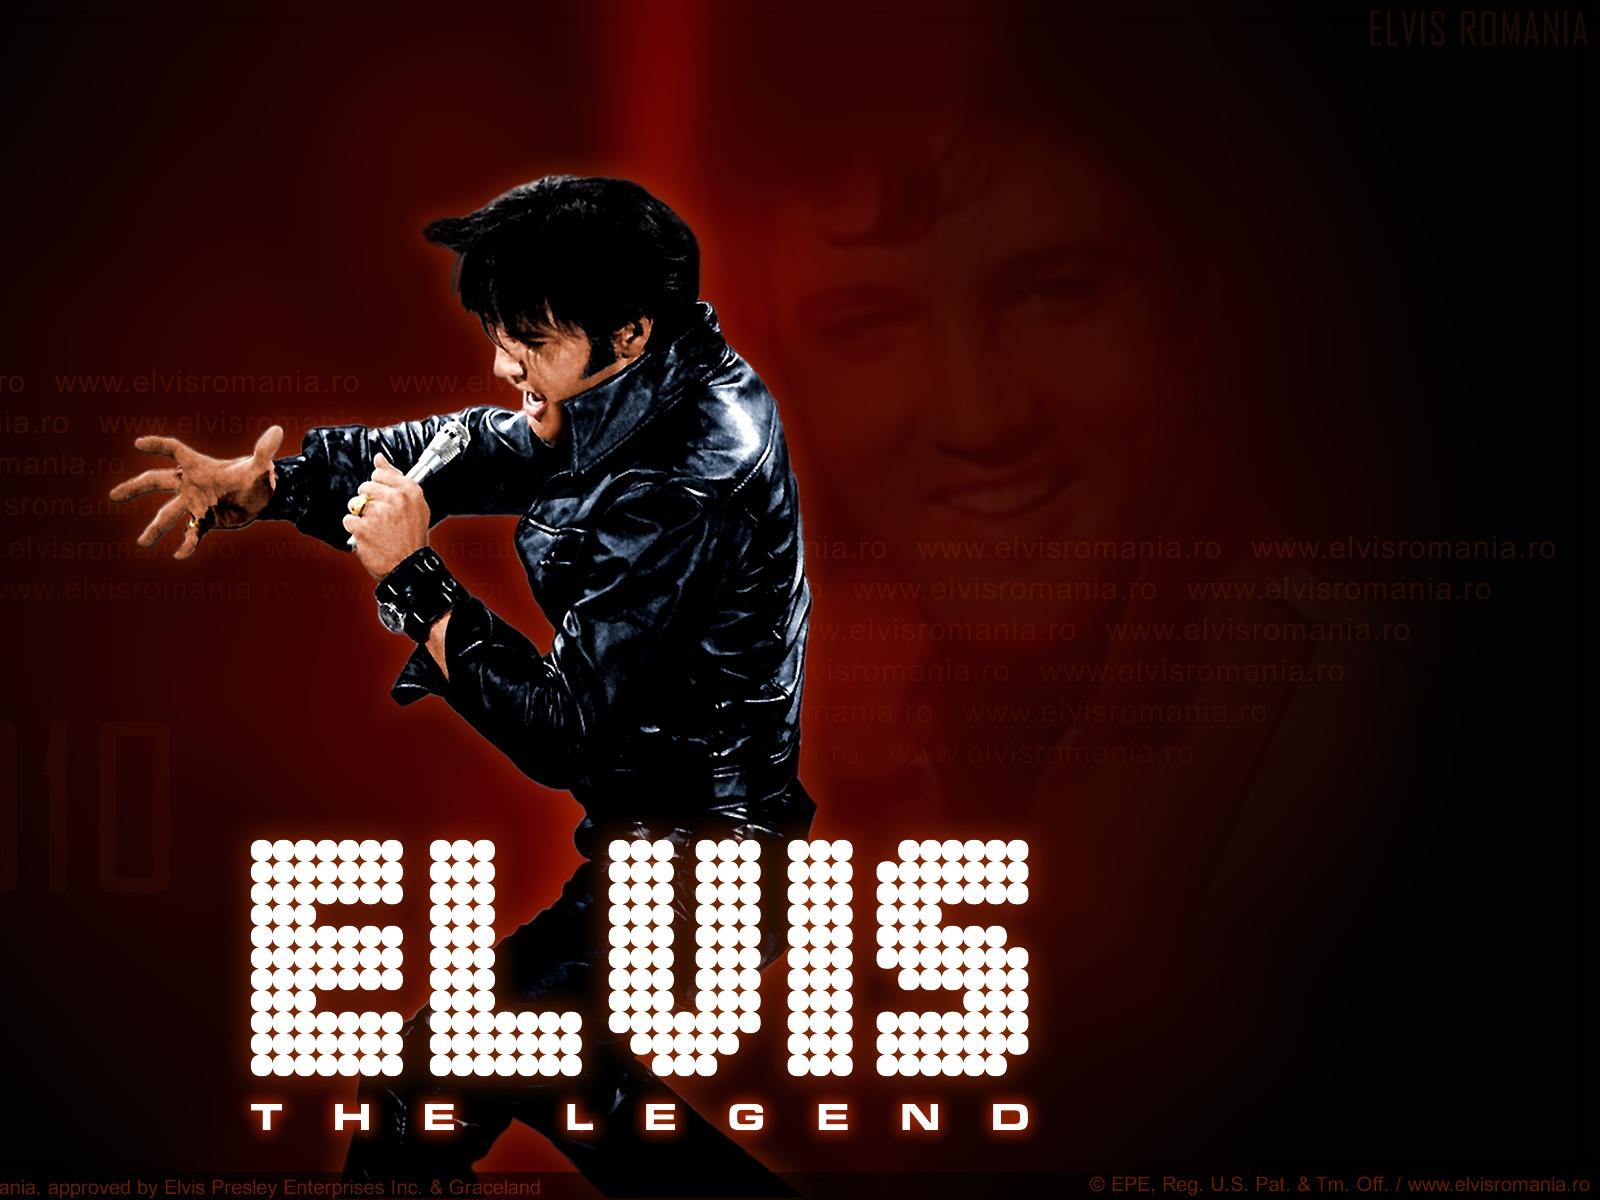 Elvis Presley wallpaper by DLJunkie  Download on ZEDGE  9ffb